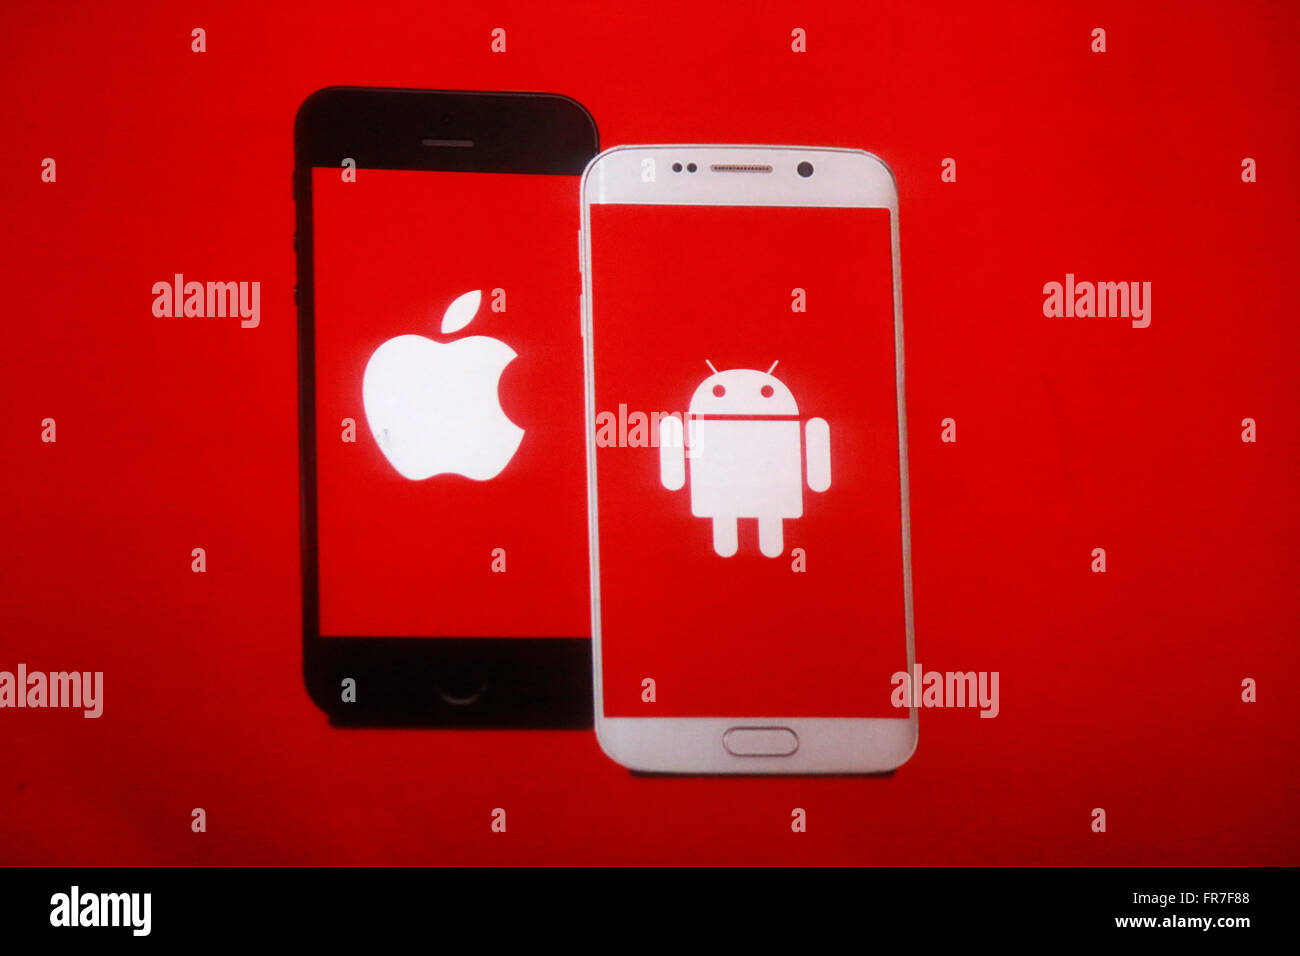 Symbolbild fuer Smartphone !Apple' und 'Android', Berlin. Stock Photo